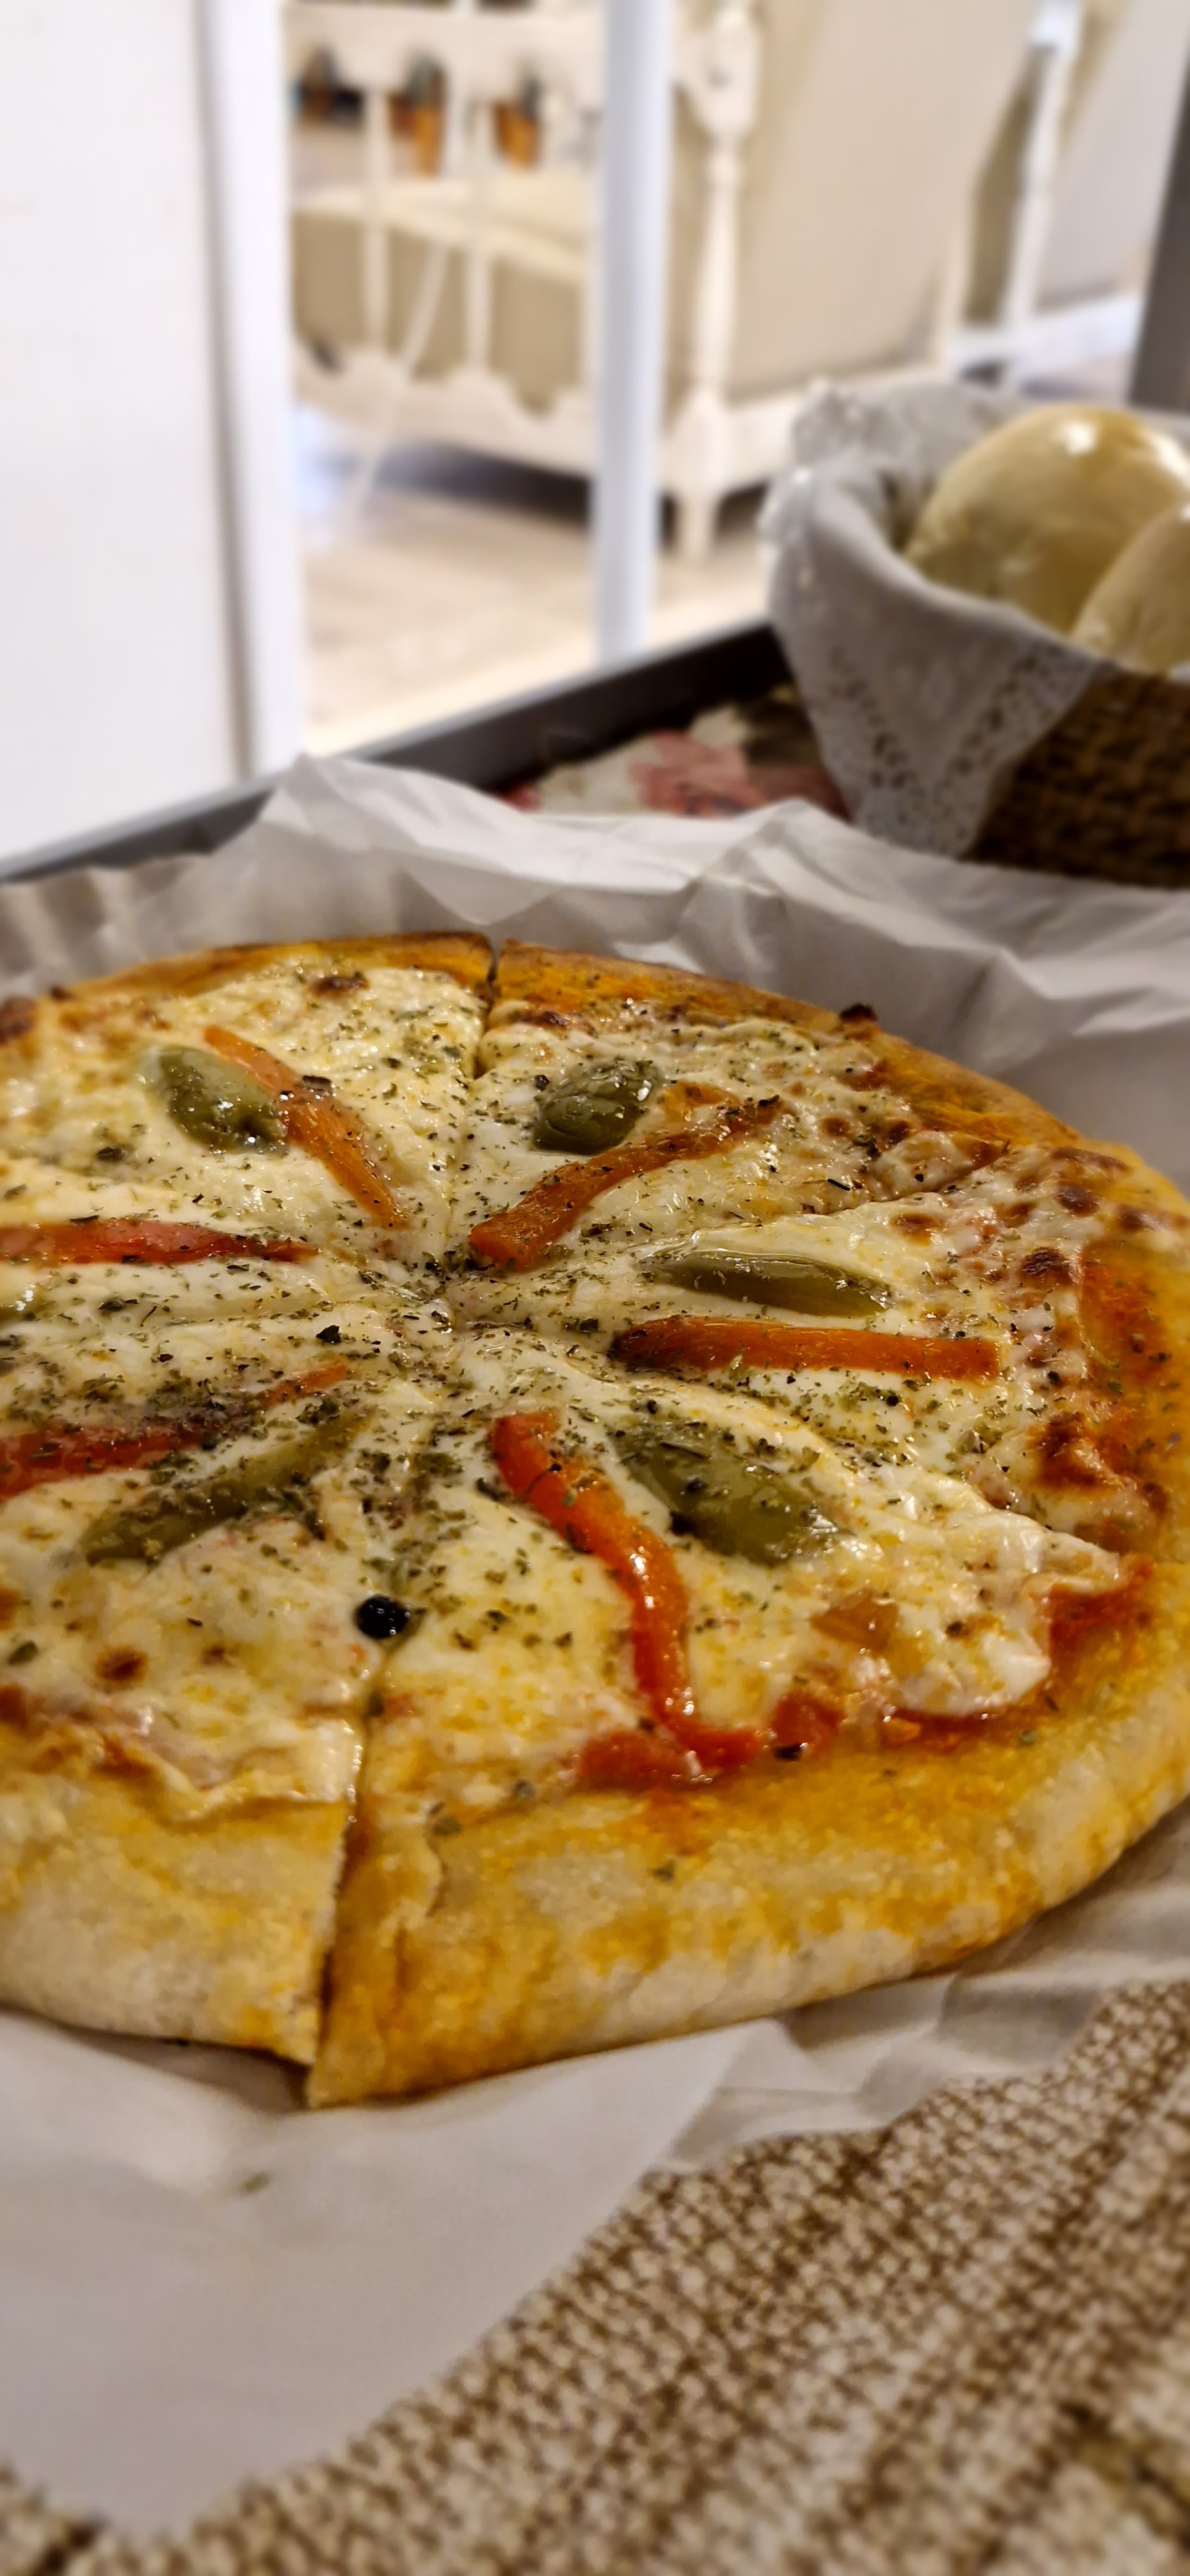 Foto de pizza casera napolitana de cerca